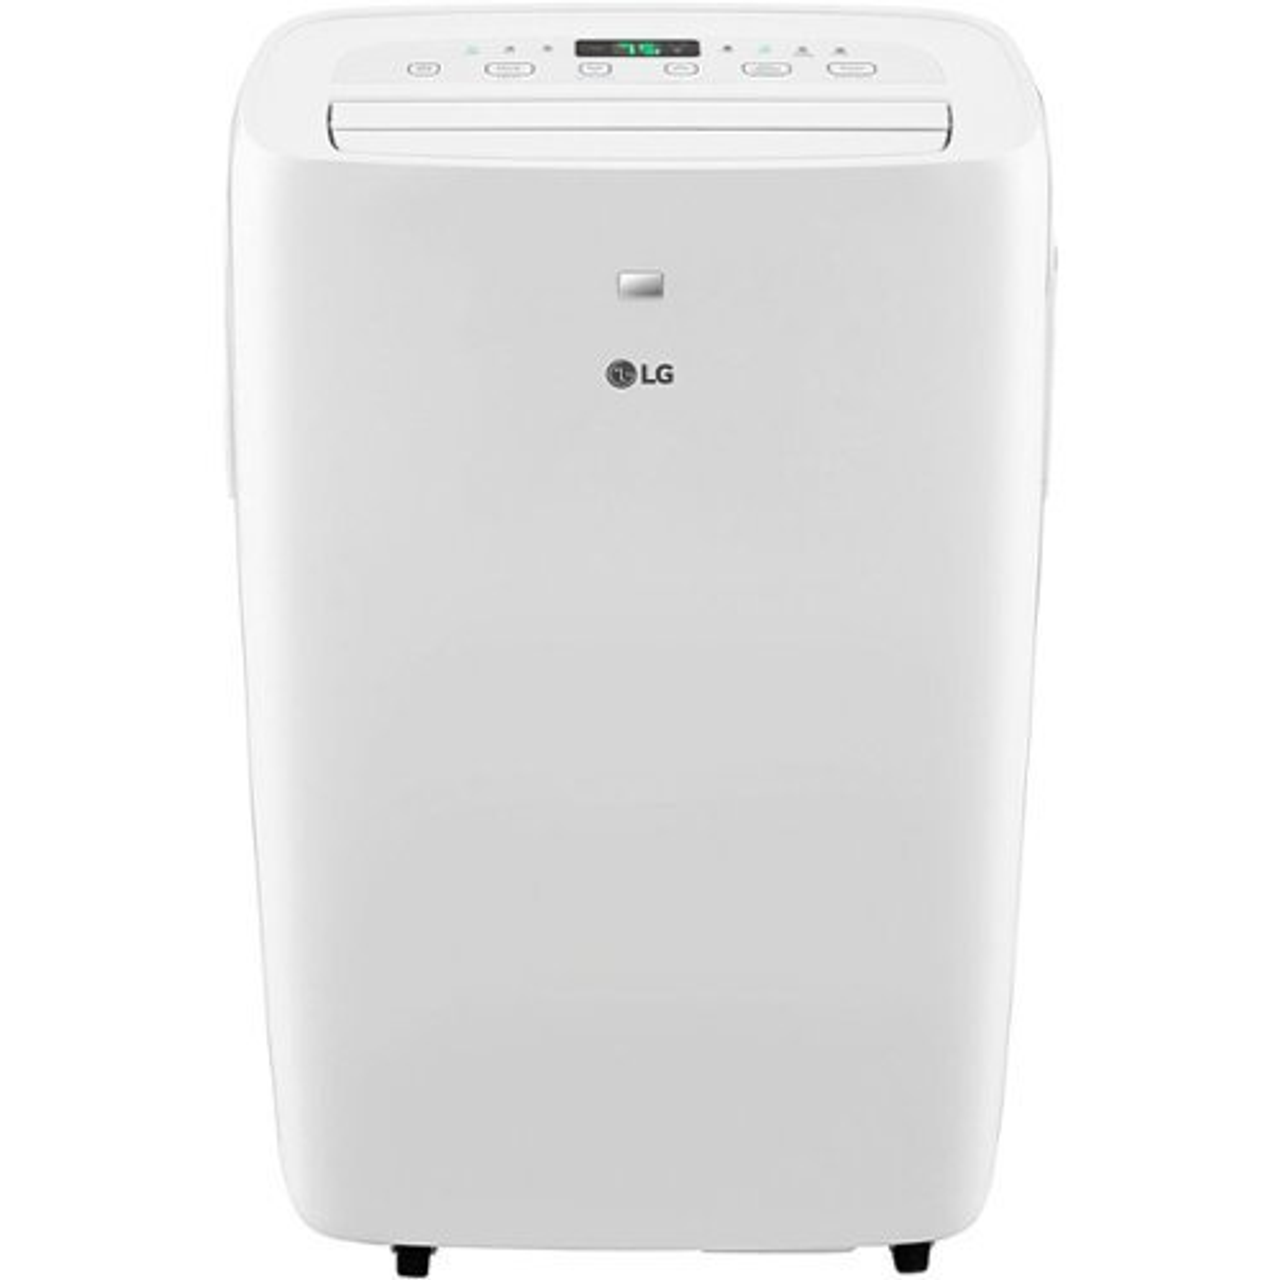 LG - 6,000 BTU (DOE) / 8,000 BTU (ASHRAE) Portable Air Conditioner, Window Installation Kit Included - White